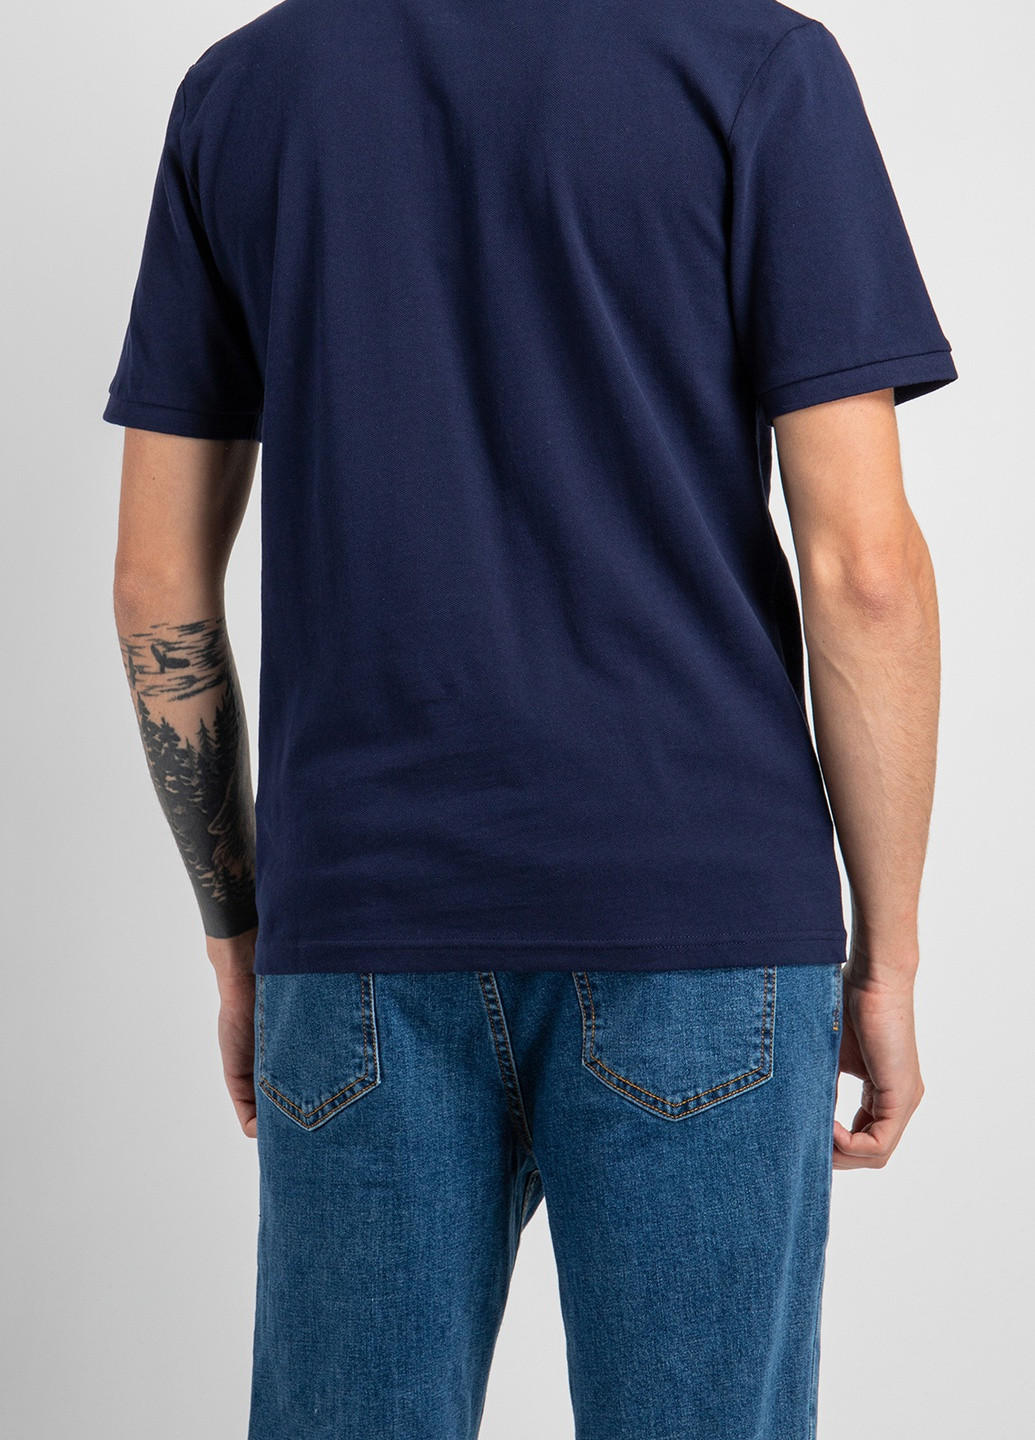 Темно-синя чорна футболка-поло з принтом Nasa